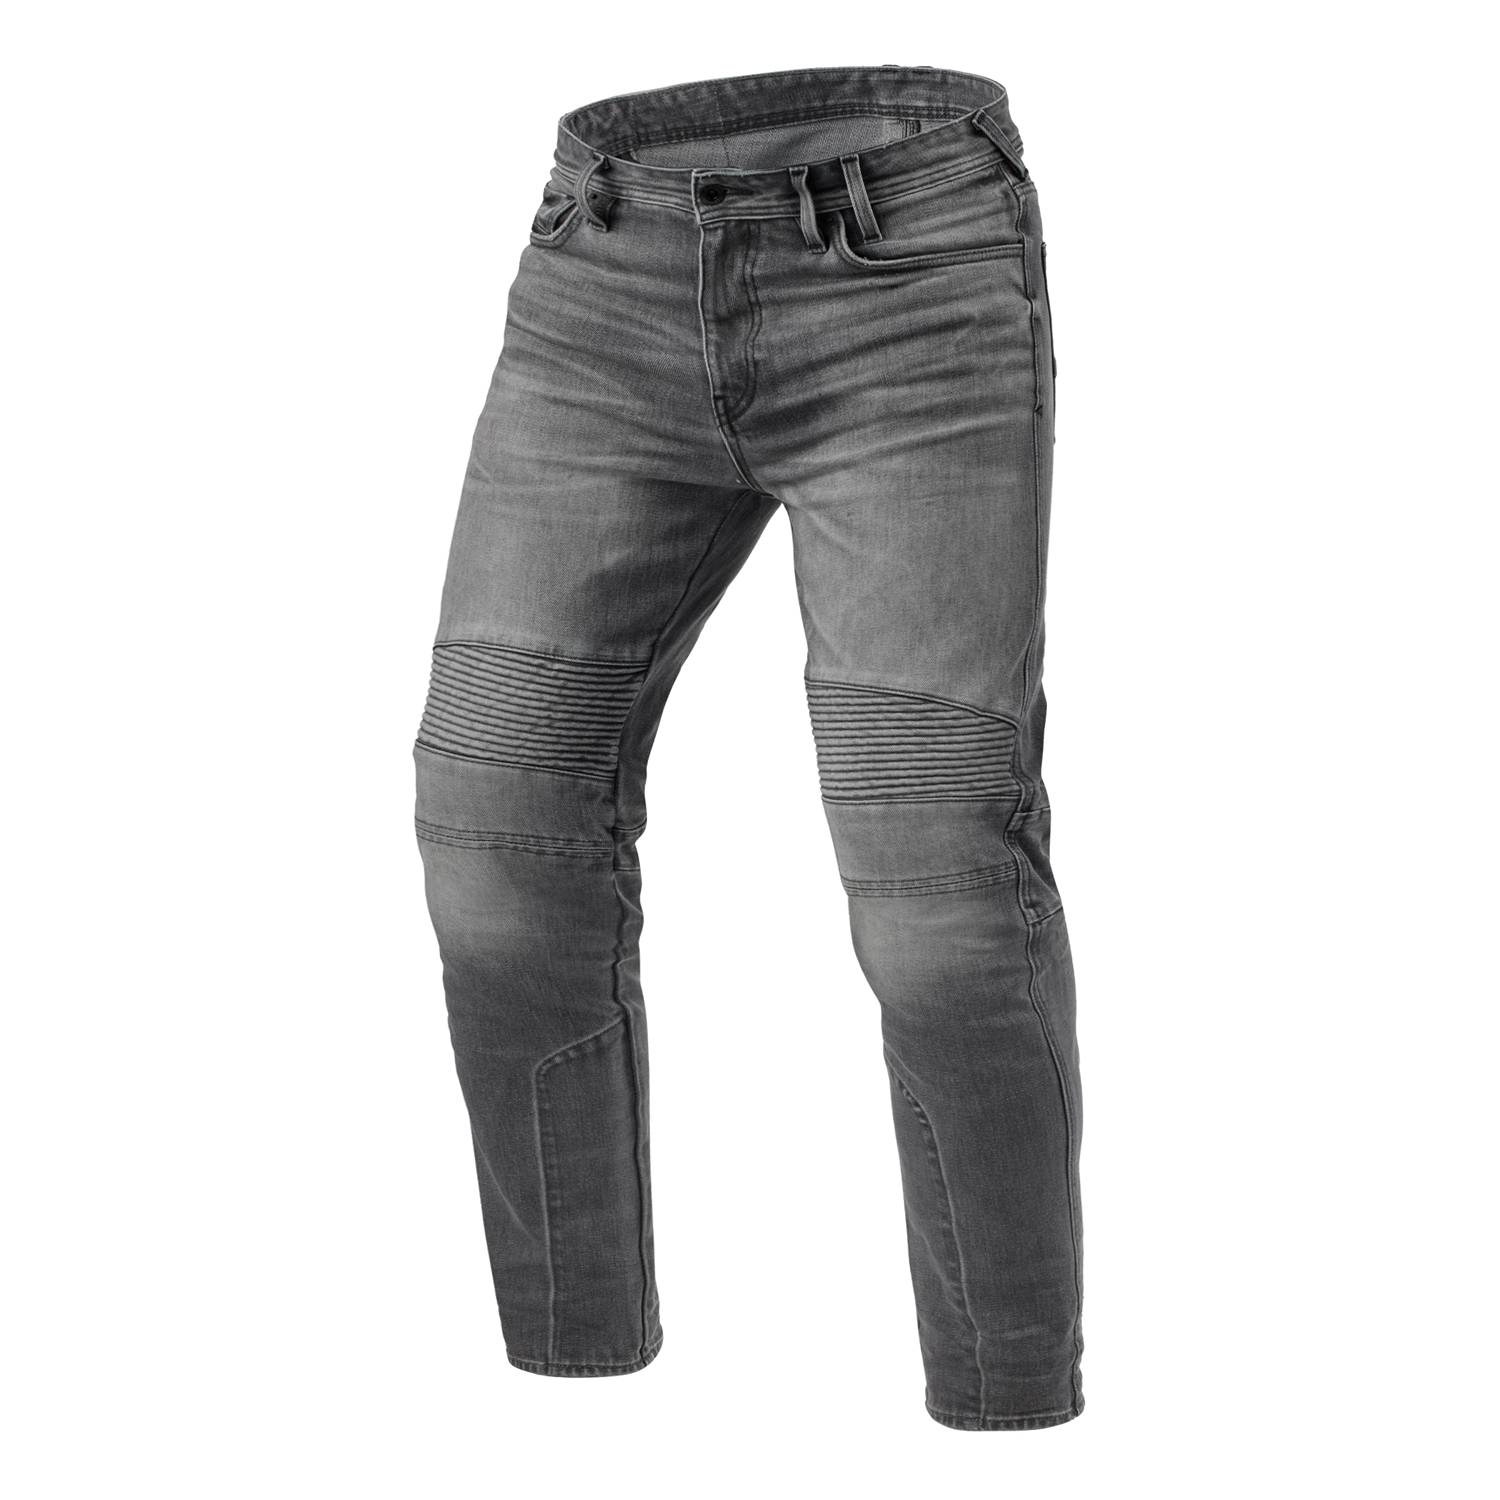 Image of REV'IT! Jeans Moto 2 TF Medium Grey Used L34 Motorcycle Jeans Talla L34/W28